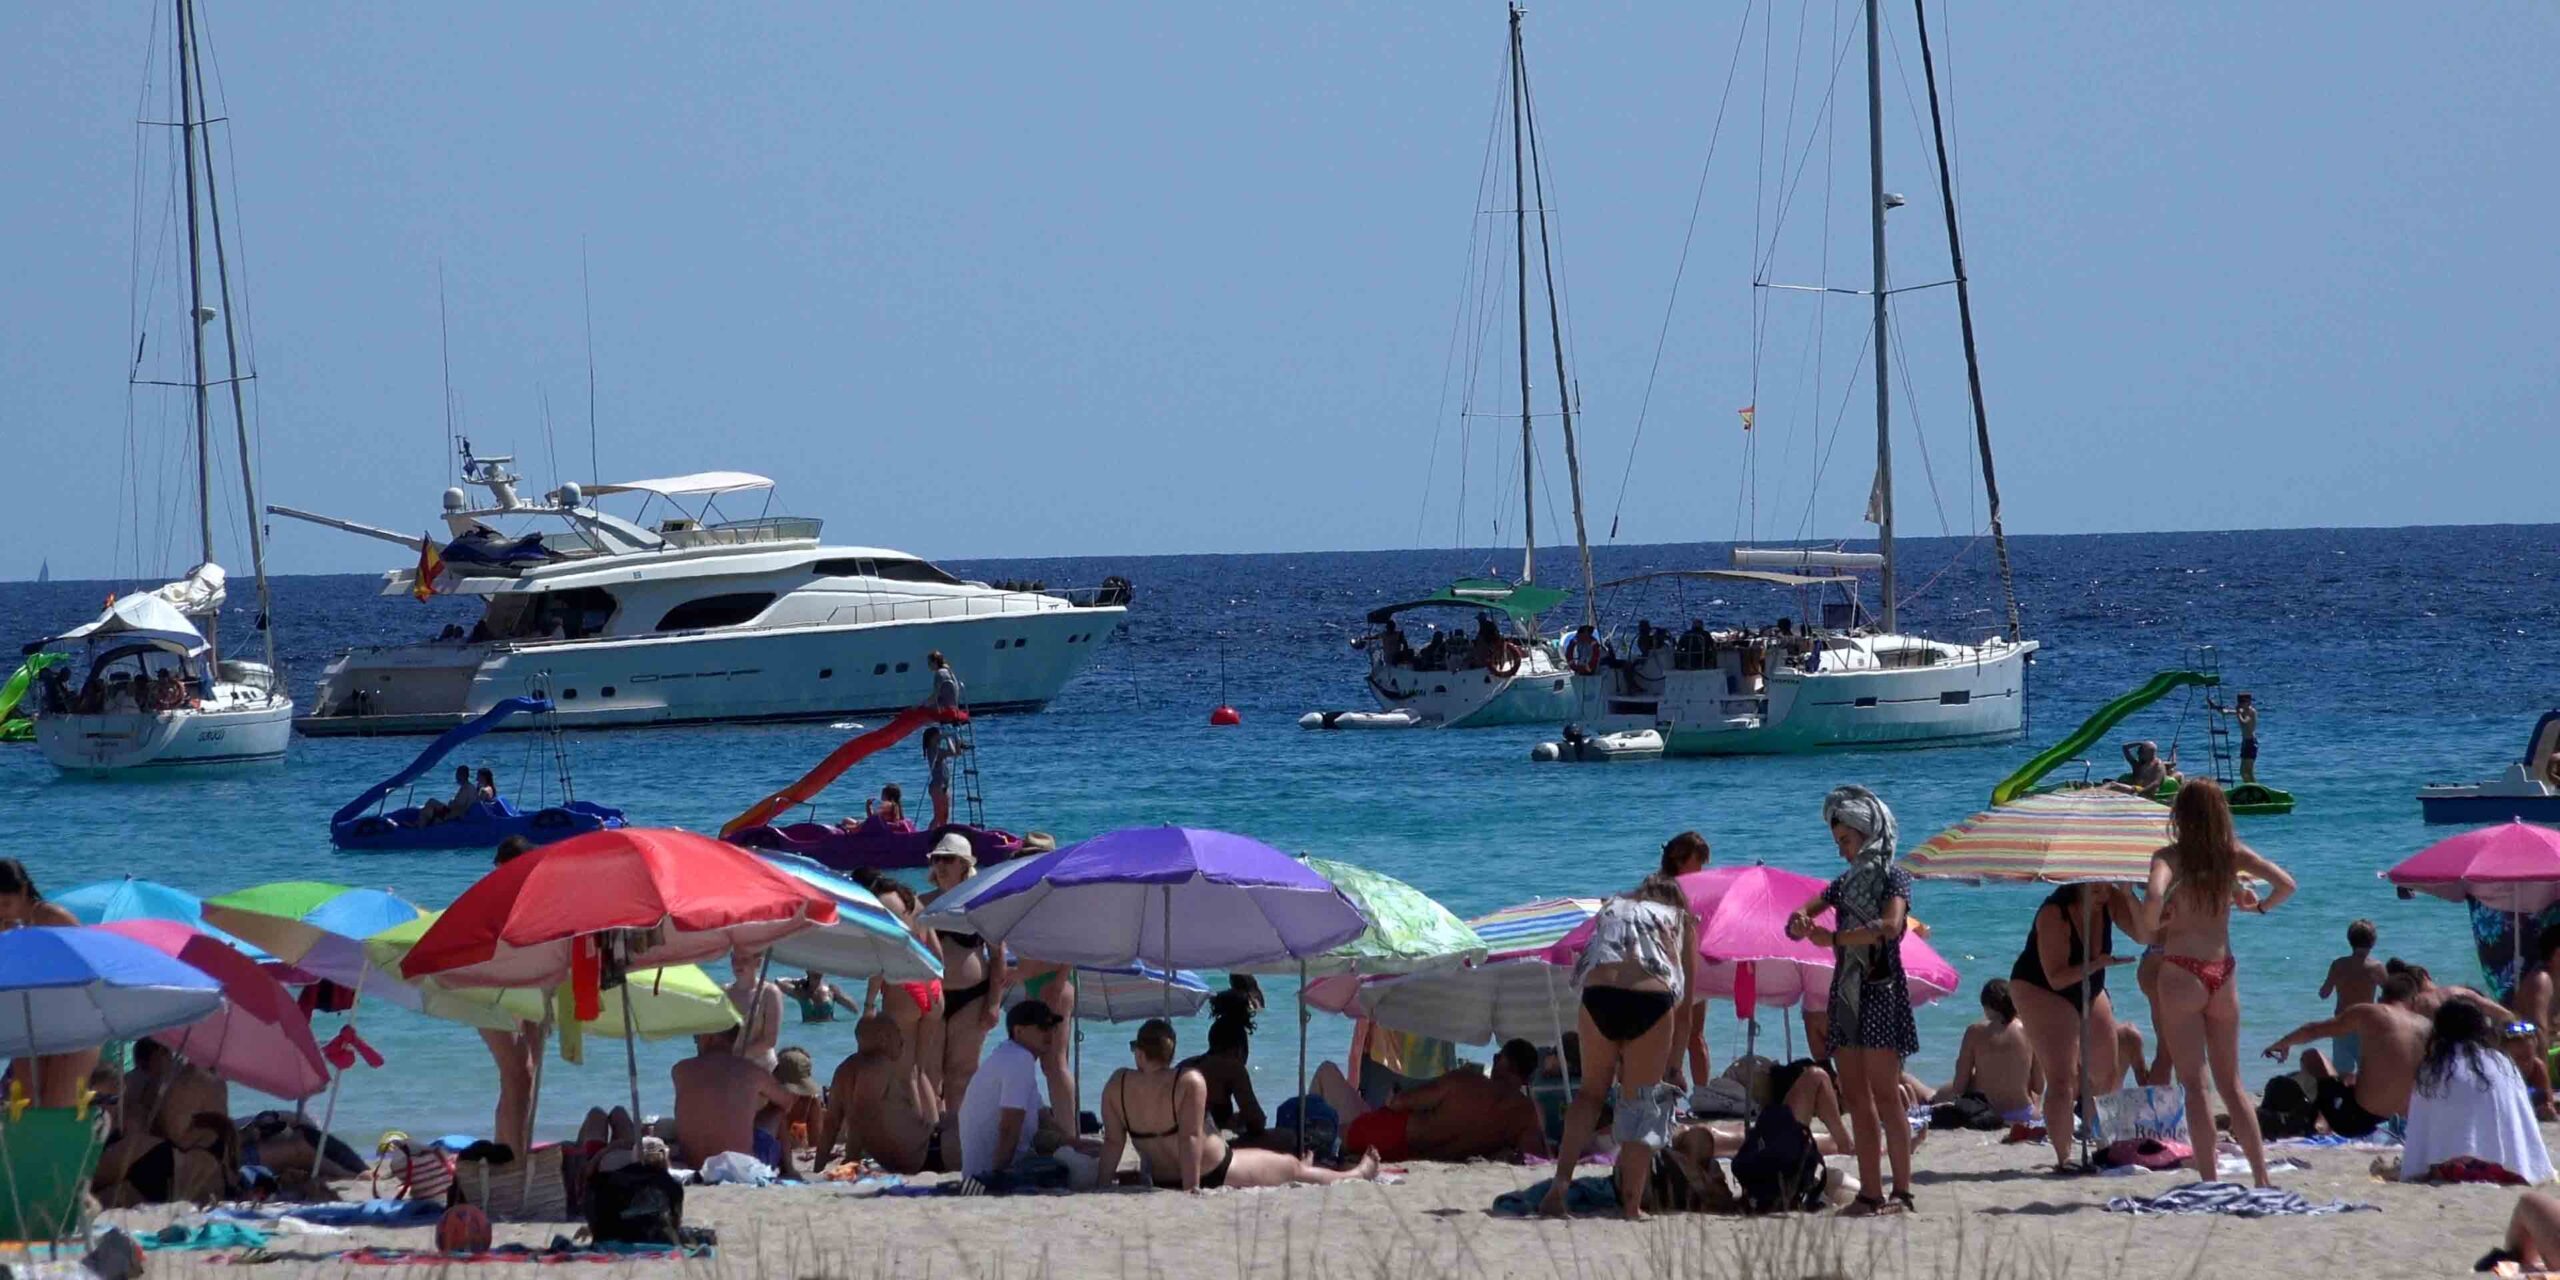 Best Anchorages Menorca Spain